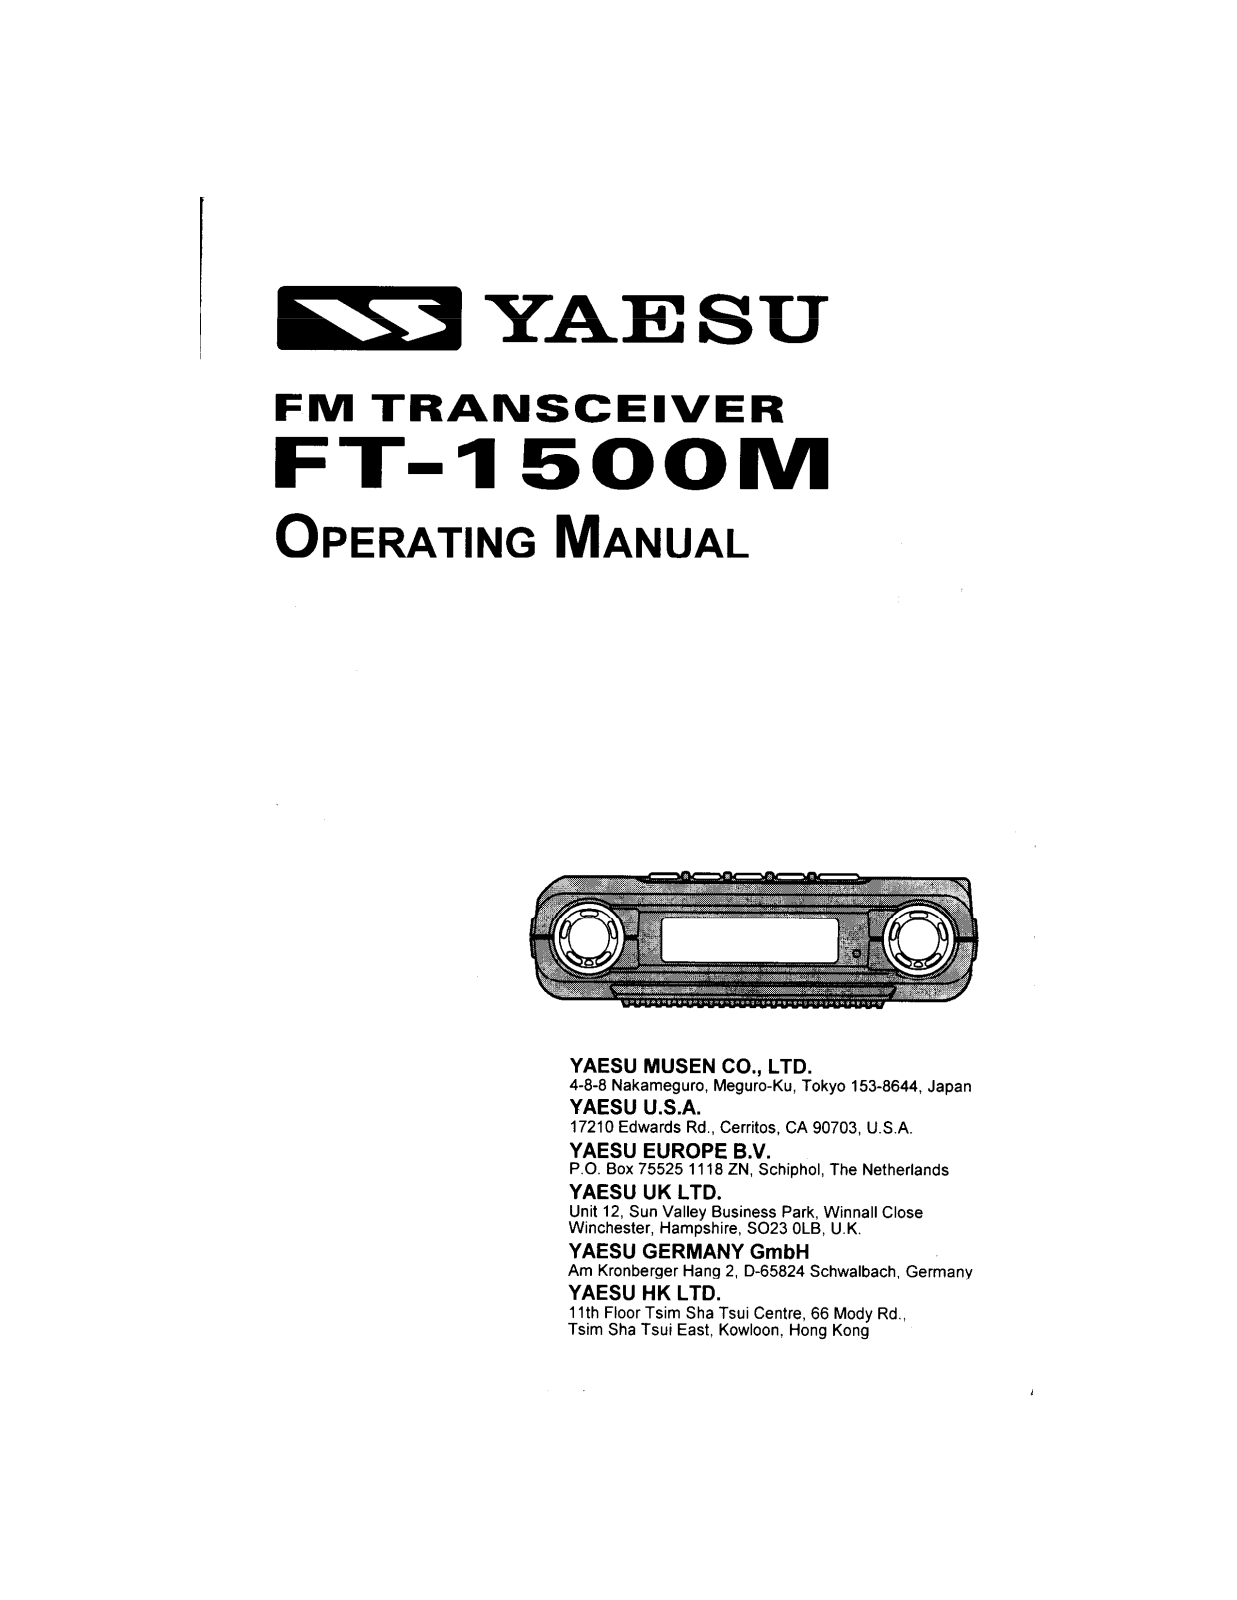 Yaesu FT-1500M User Manual